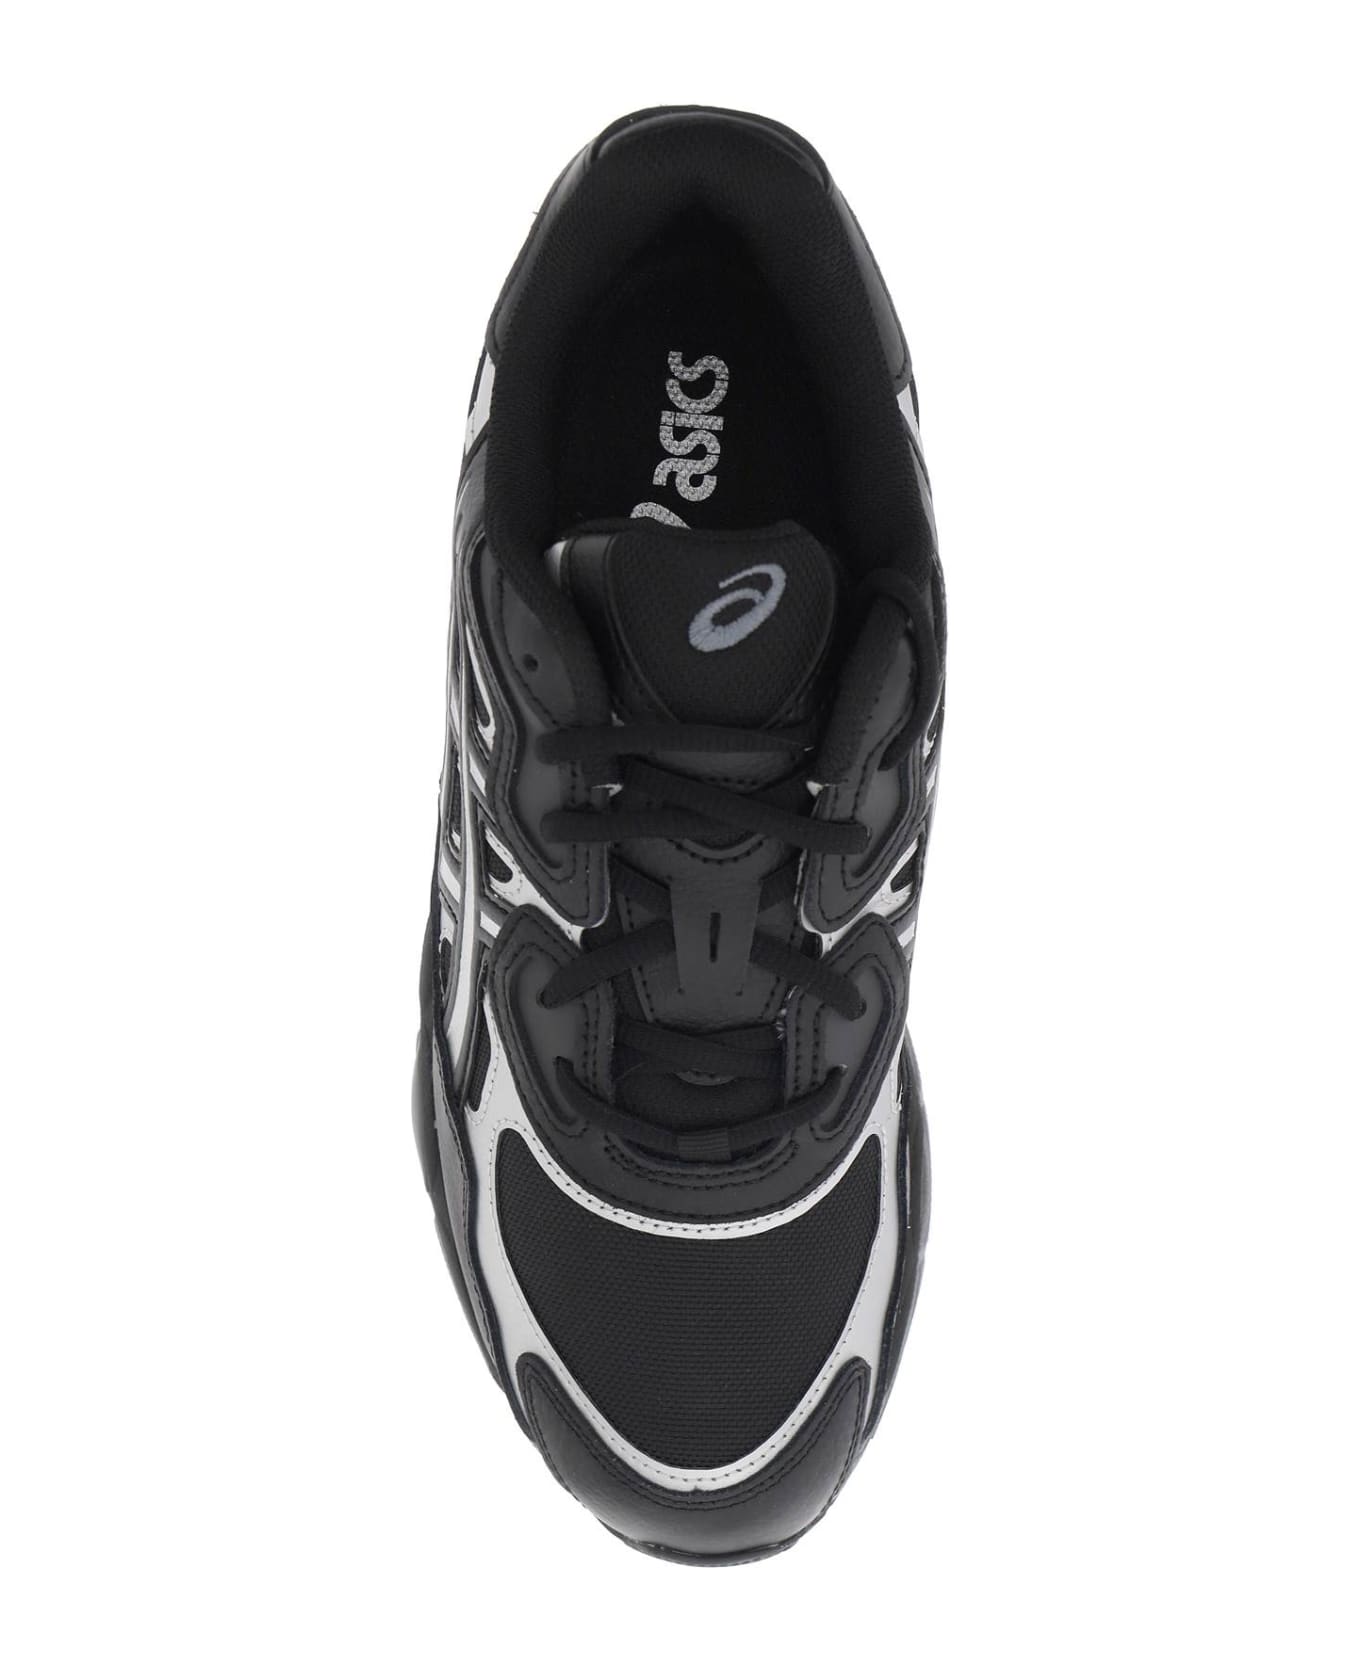 Asics Gel-kayano 14 Sneakers - BLACK GRAPHITE GREY (Black)